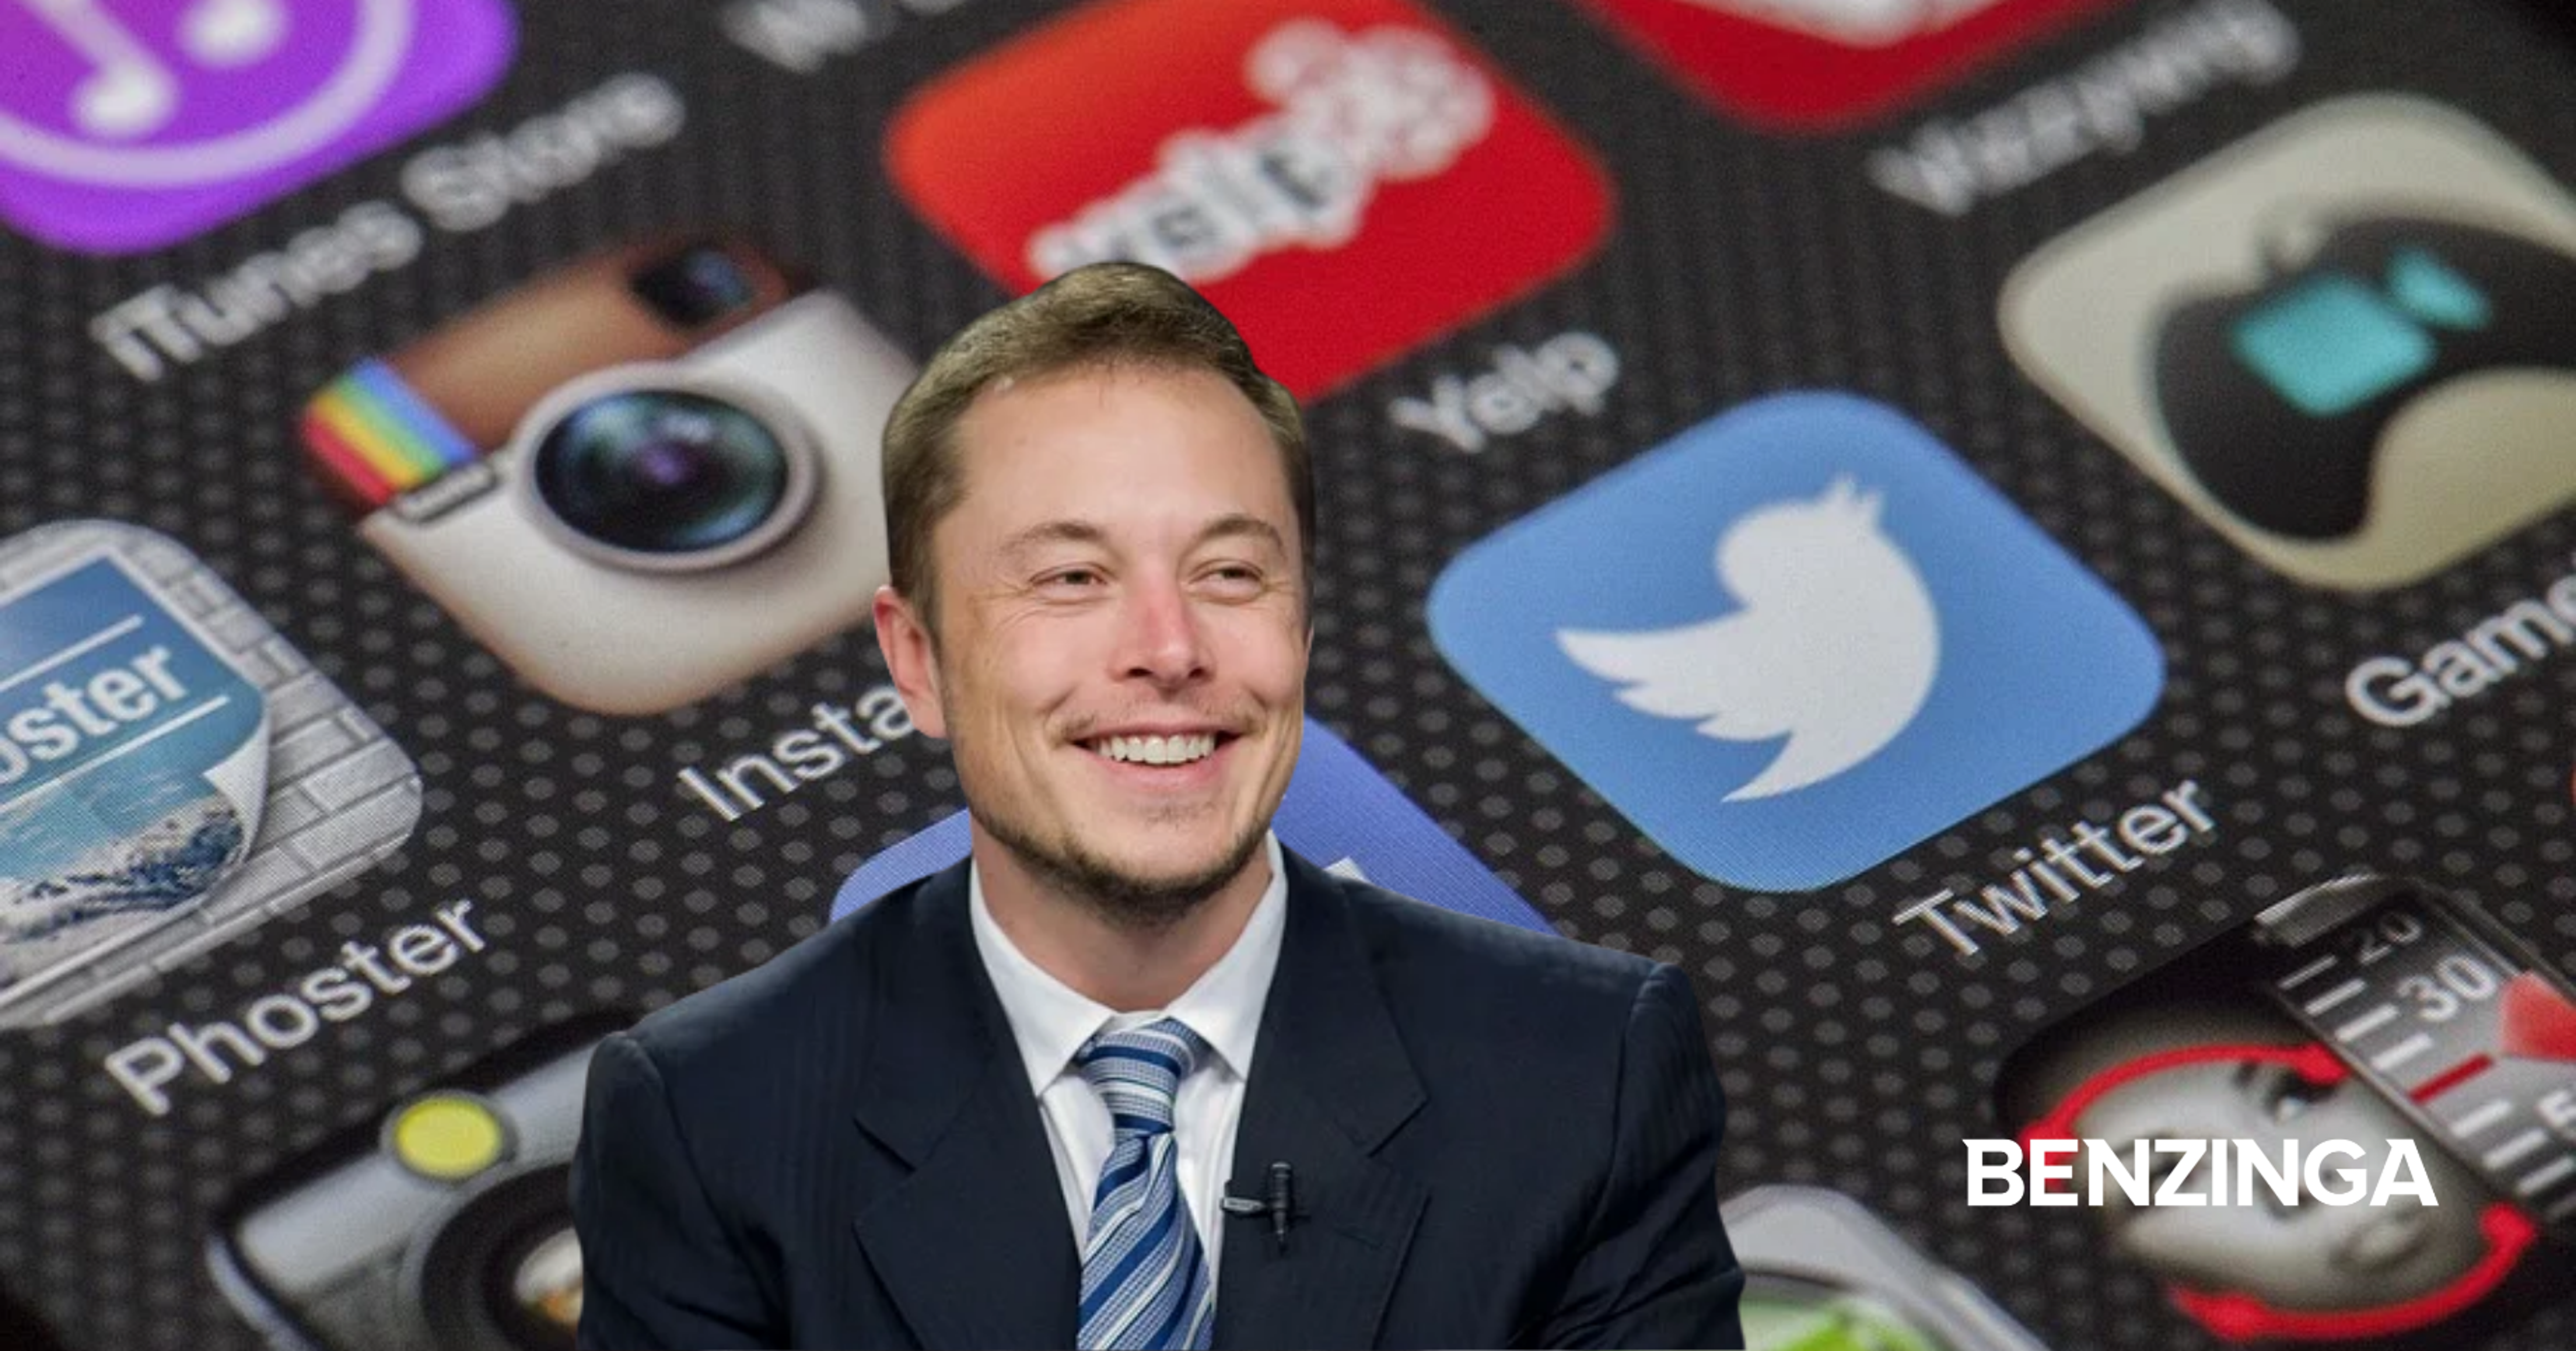 Will Elon Musk Launch His Own Social Media?